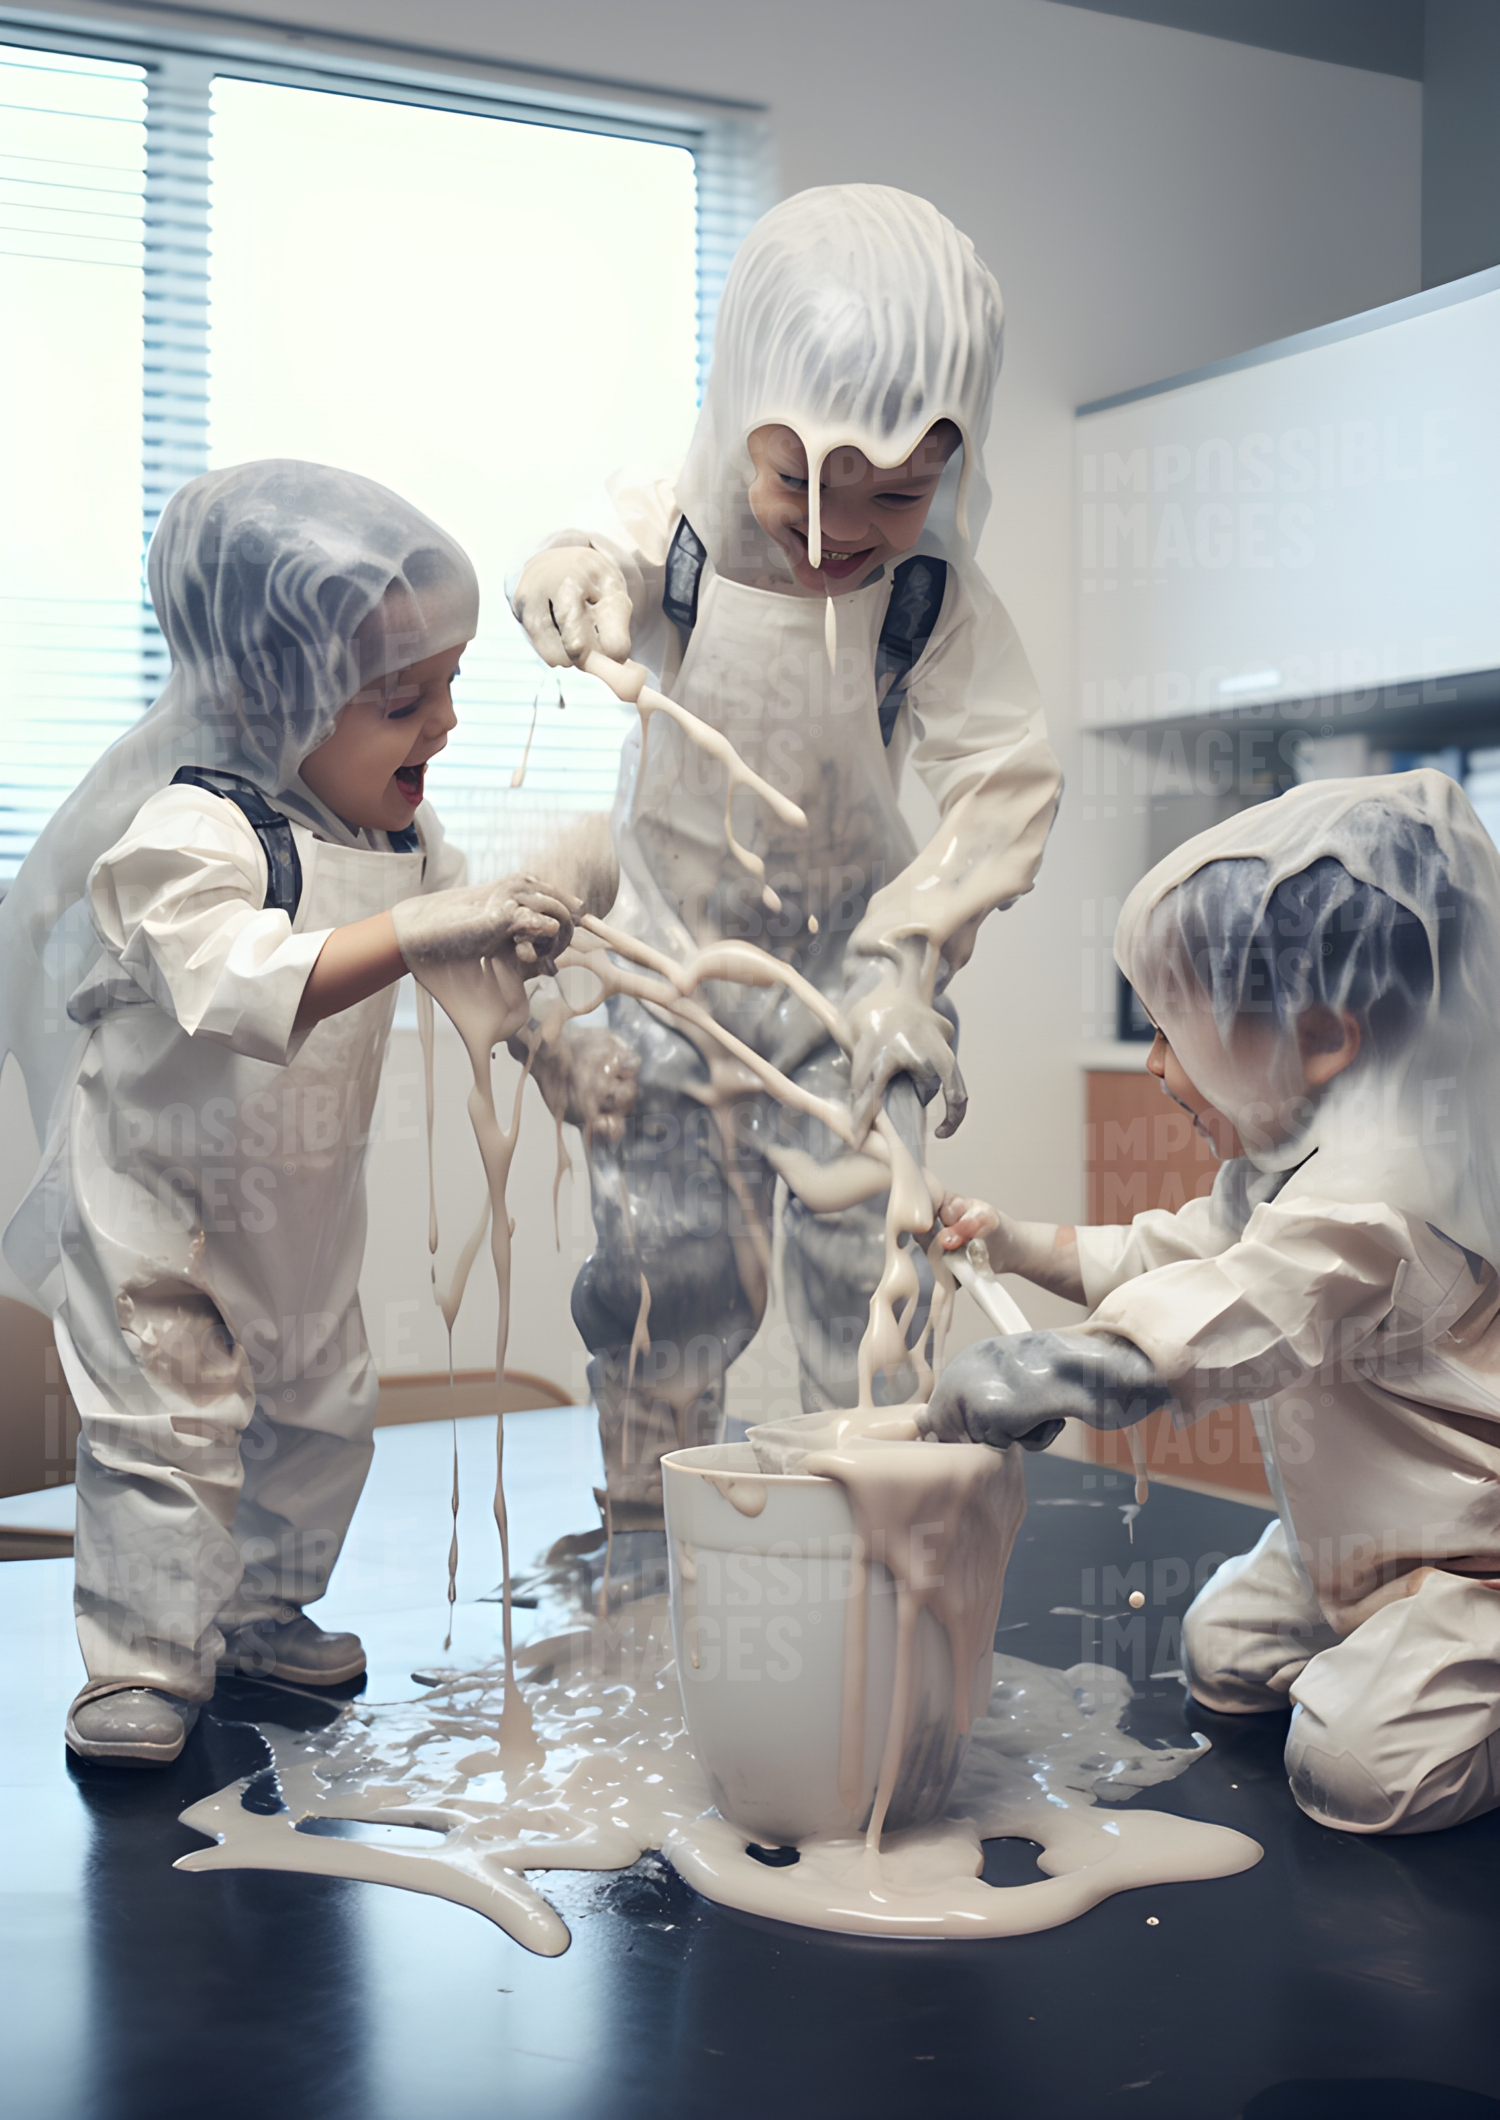 Children performing strange experiments